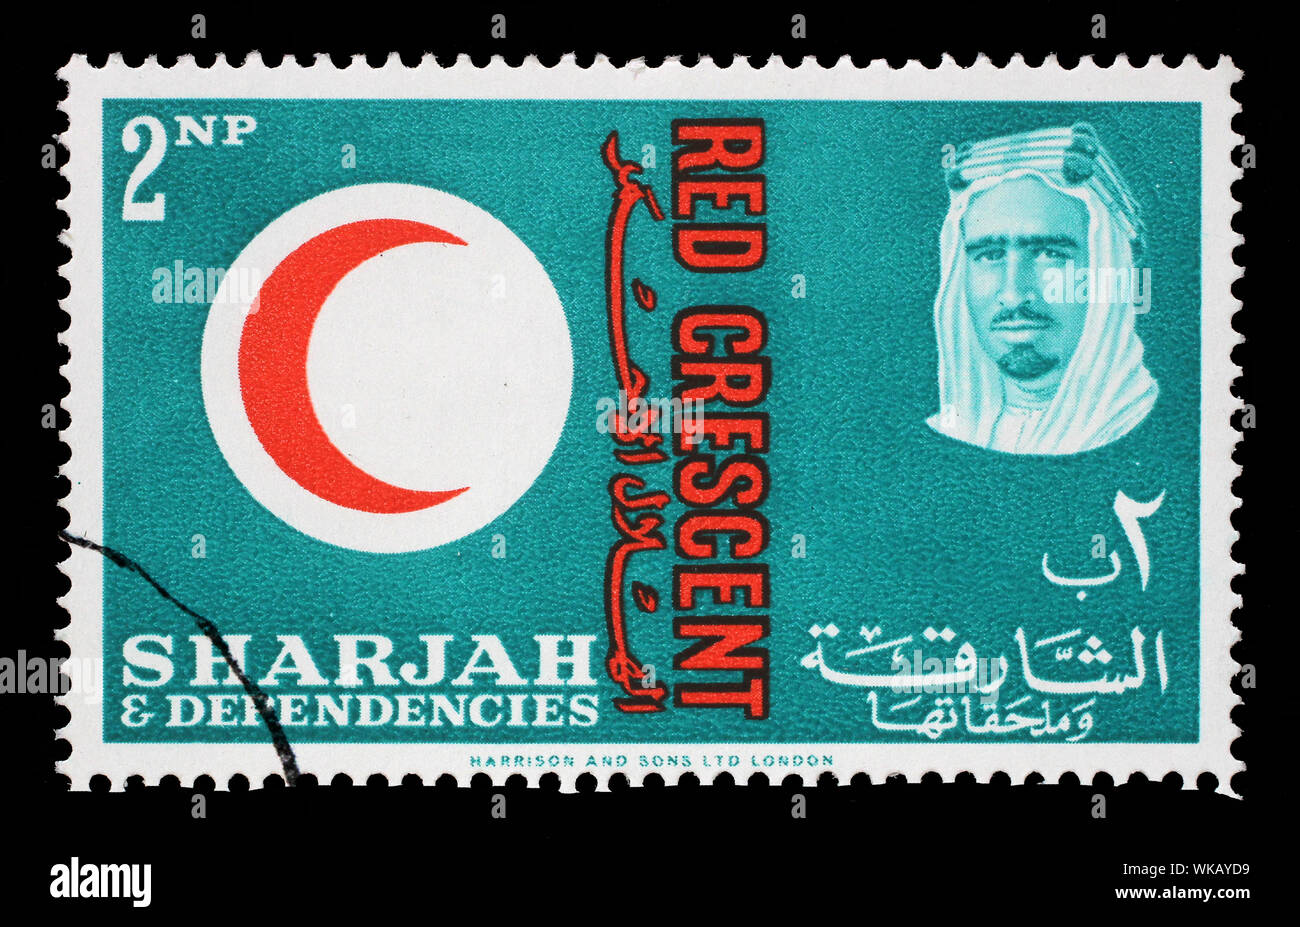 Stamp issued in the Sharjah shows Red Crescent Emblem, portrait of Sheik Saqr bin Sultan al Qasimi, 100 years International Red Cross, circa 1963. Stock Photo